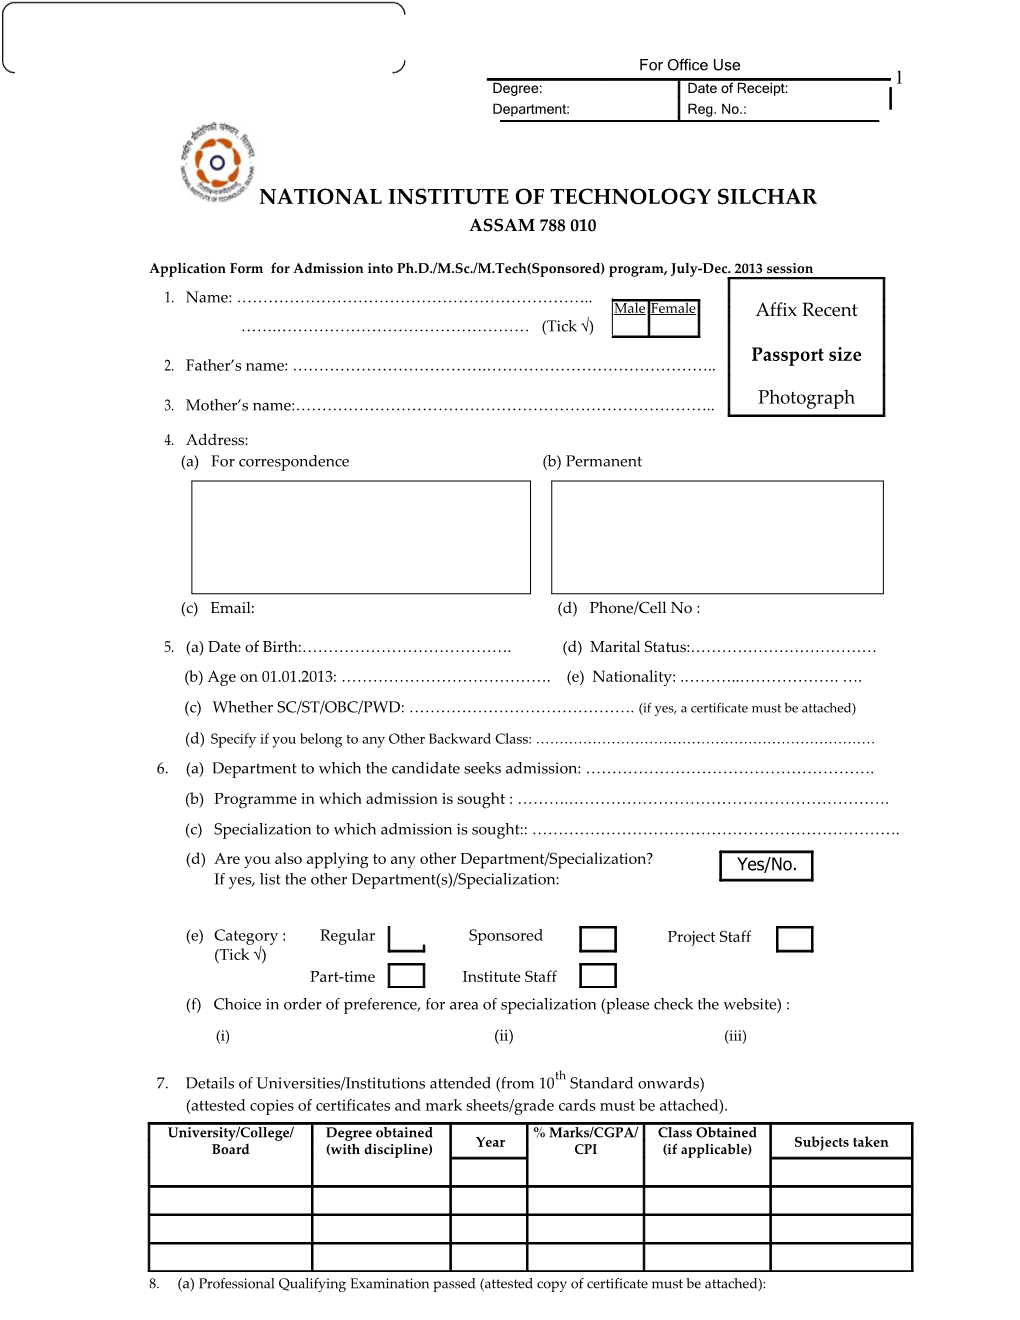 Application Form for Admission Into Ph.D./M.Sc./M.Tech(Sponsored)Program, July-Dec. 2013